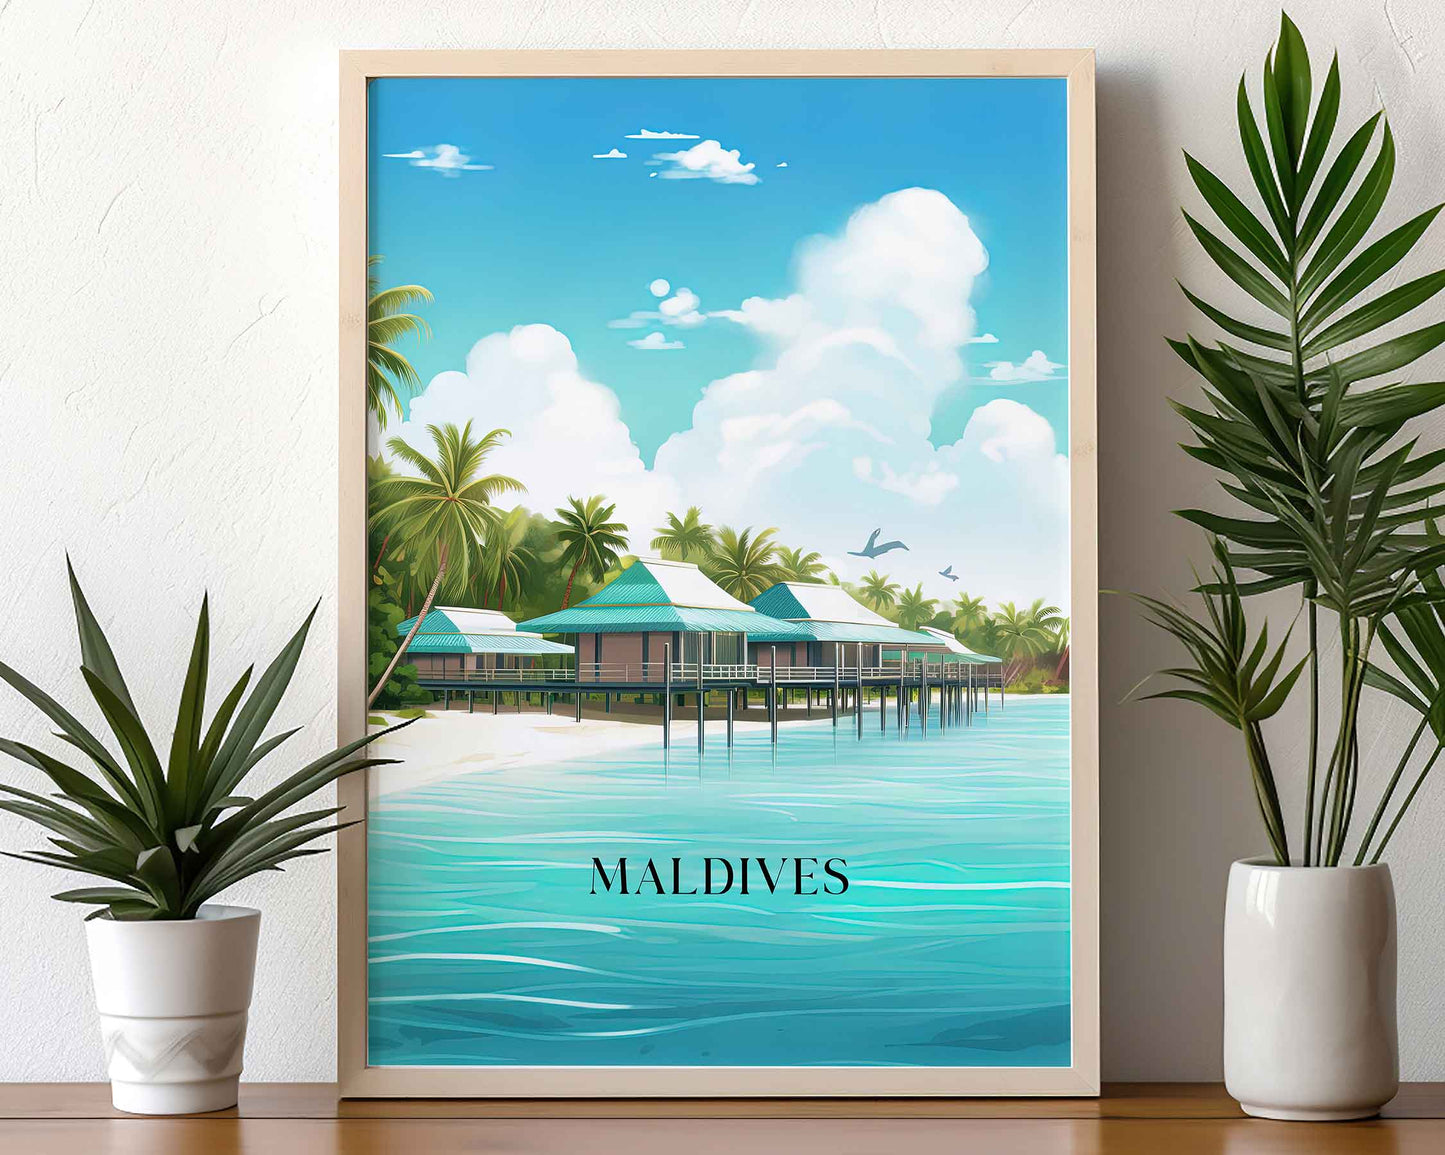 Framed Image of Maldives Travel Poster Prints Tropical Wall Art Illustration